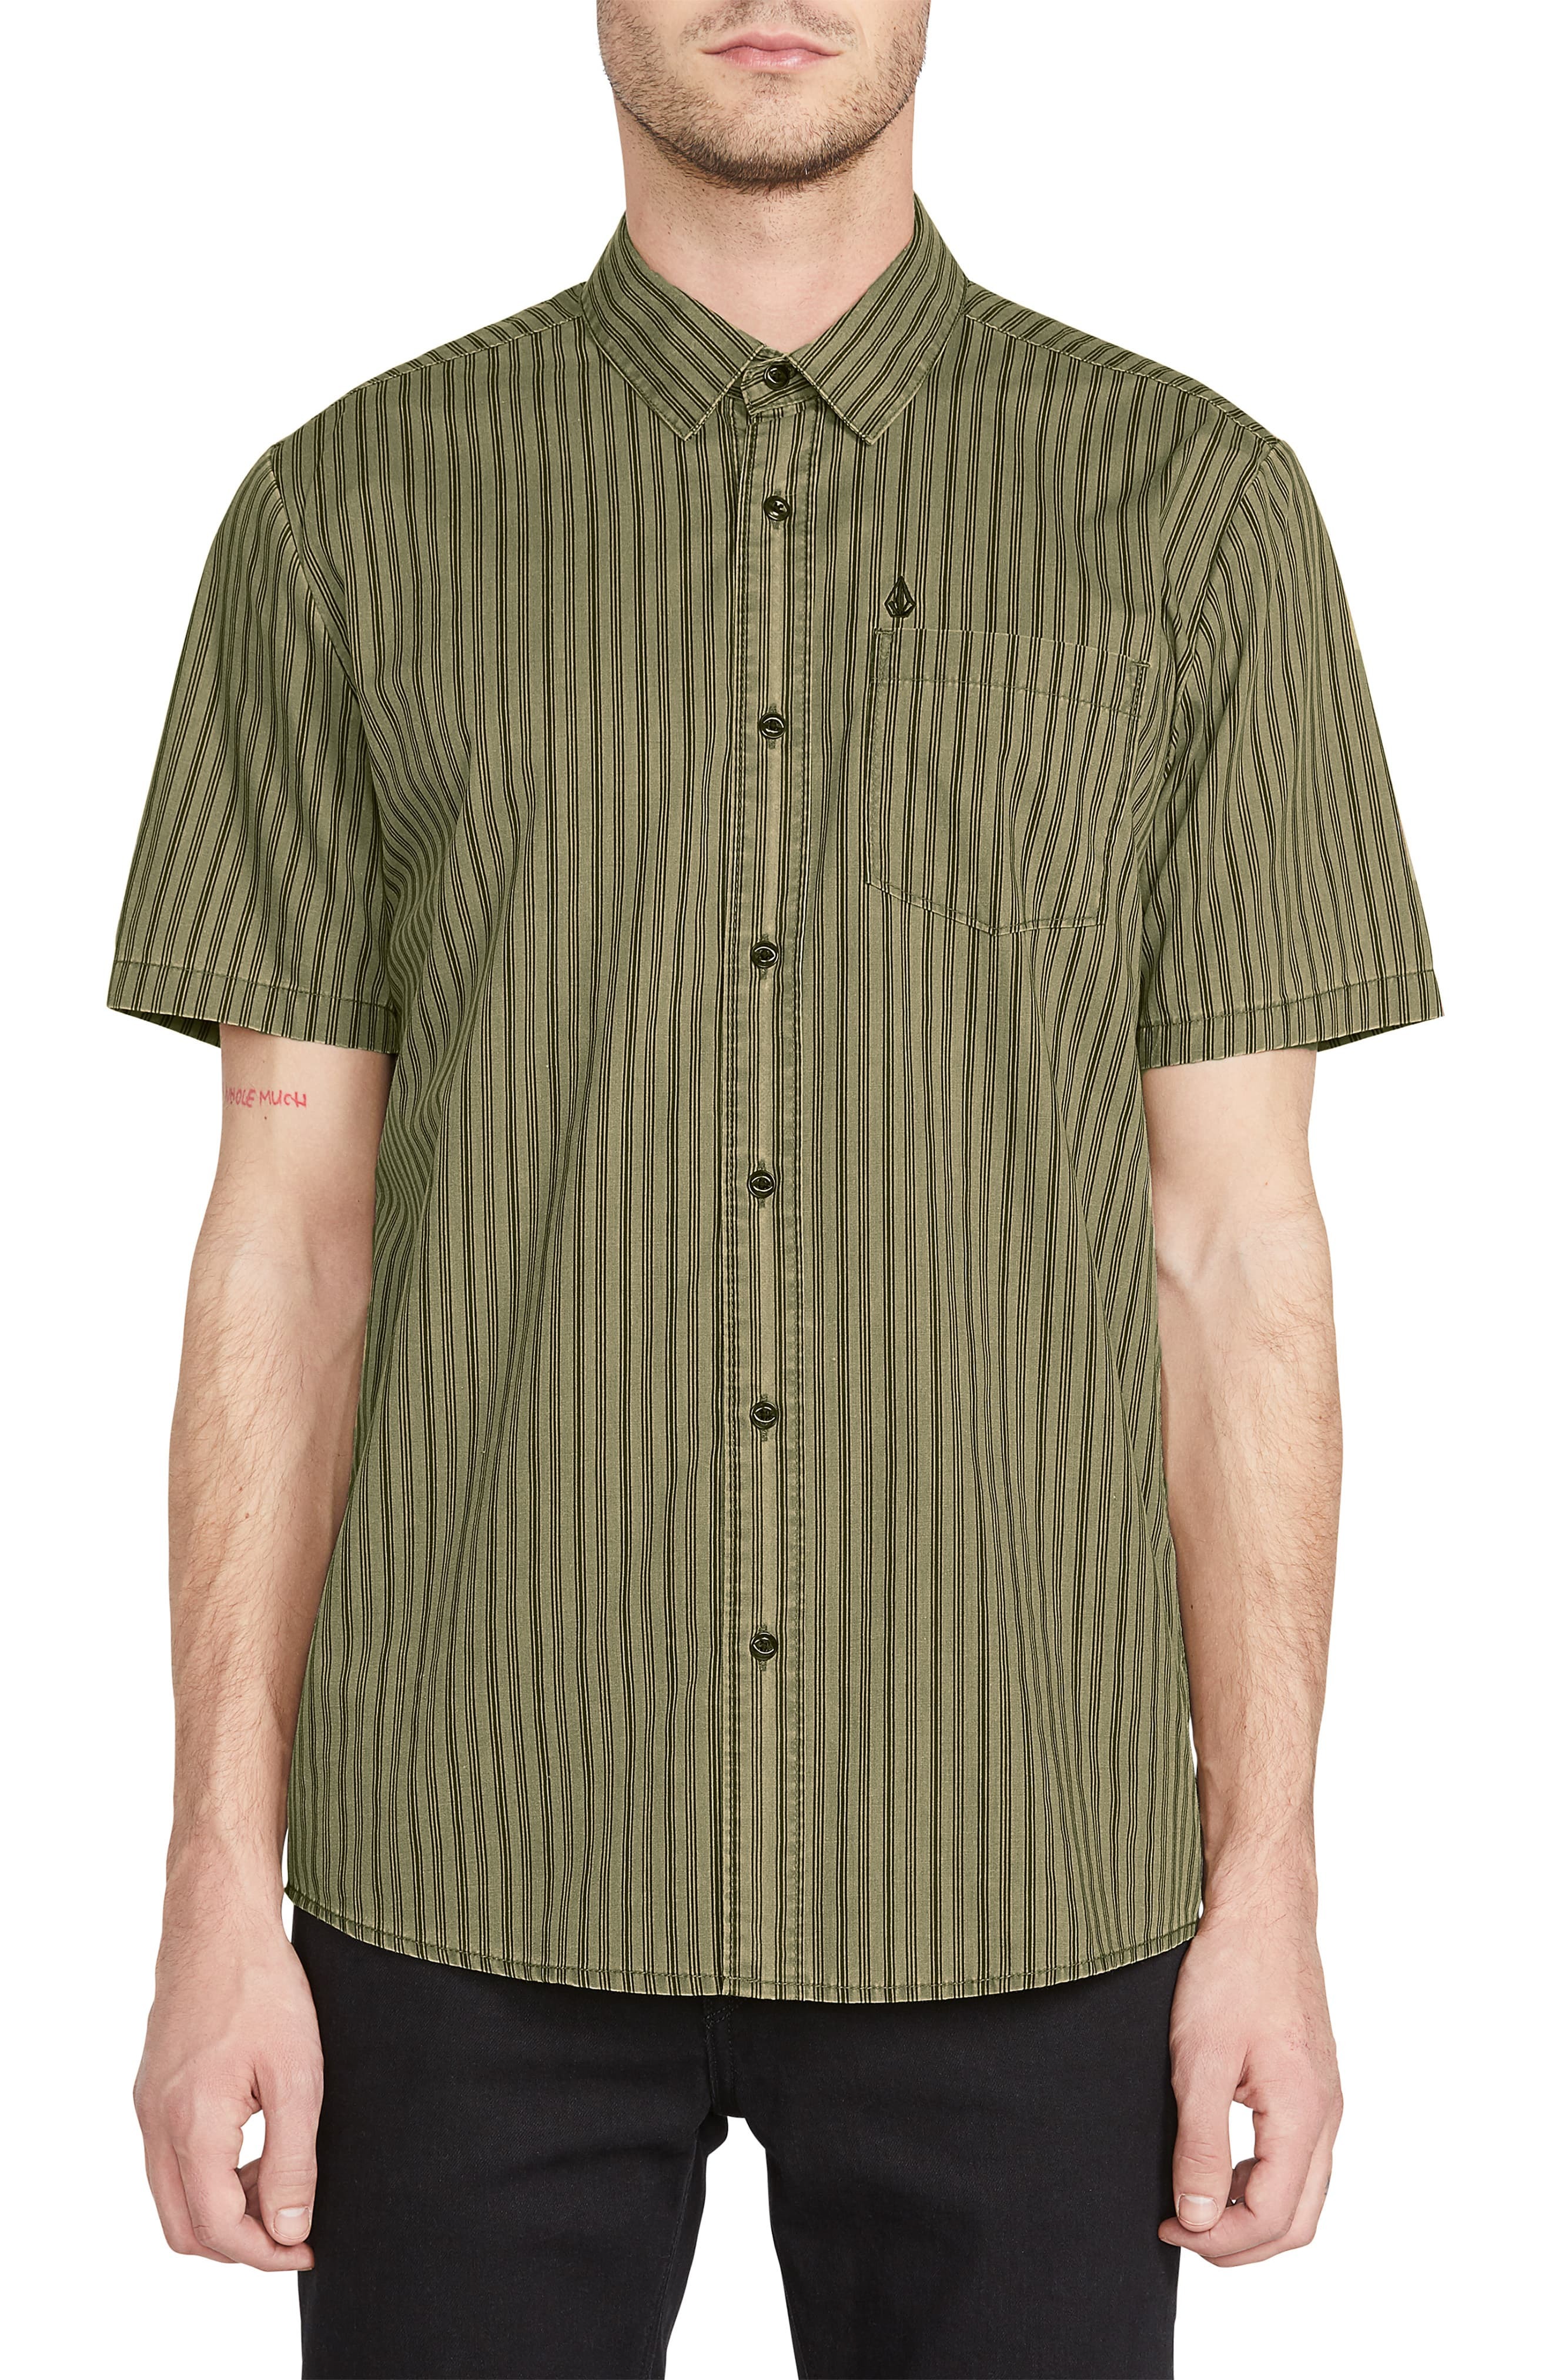 Xiloccer Mens Buttons Stripe Short Sleeve Patchwork Casual T-Shirt Tops Blouse